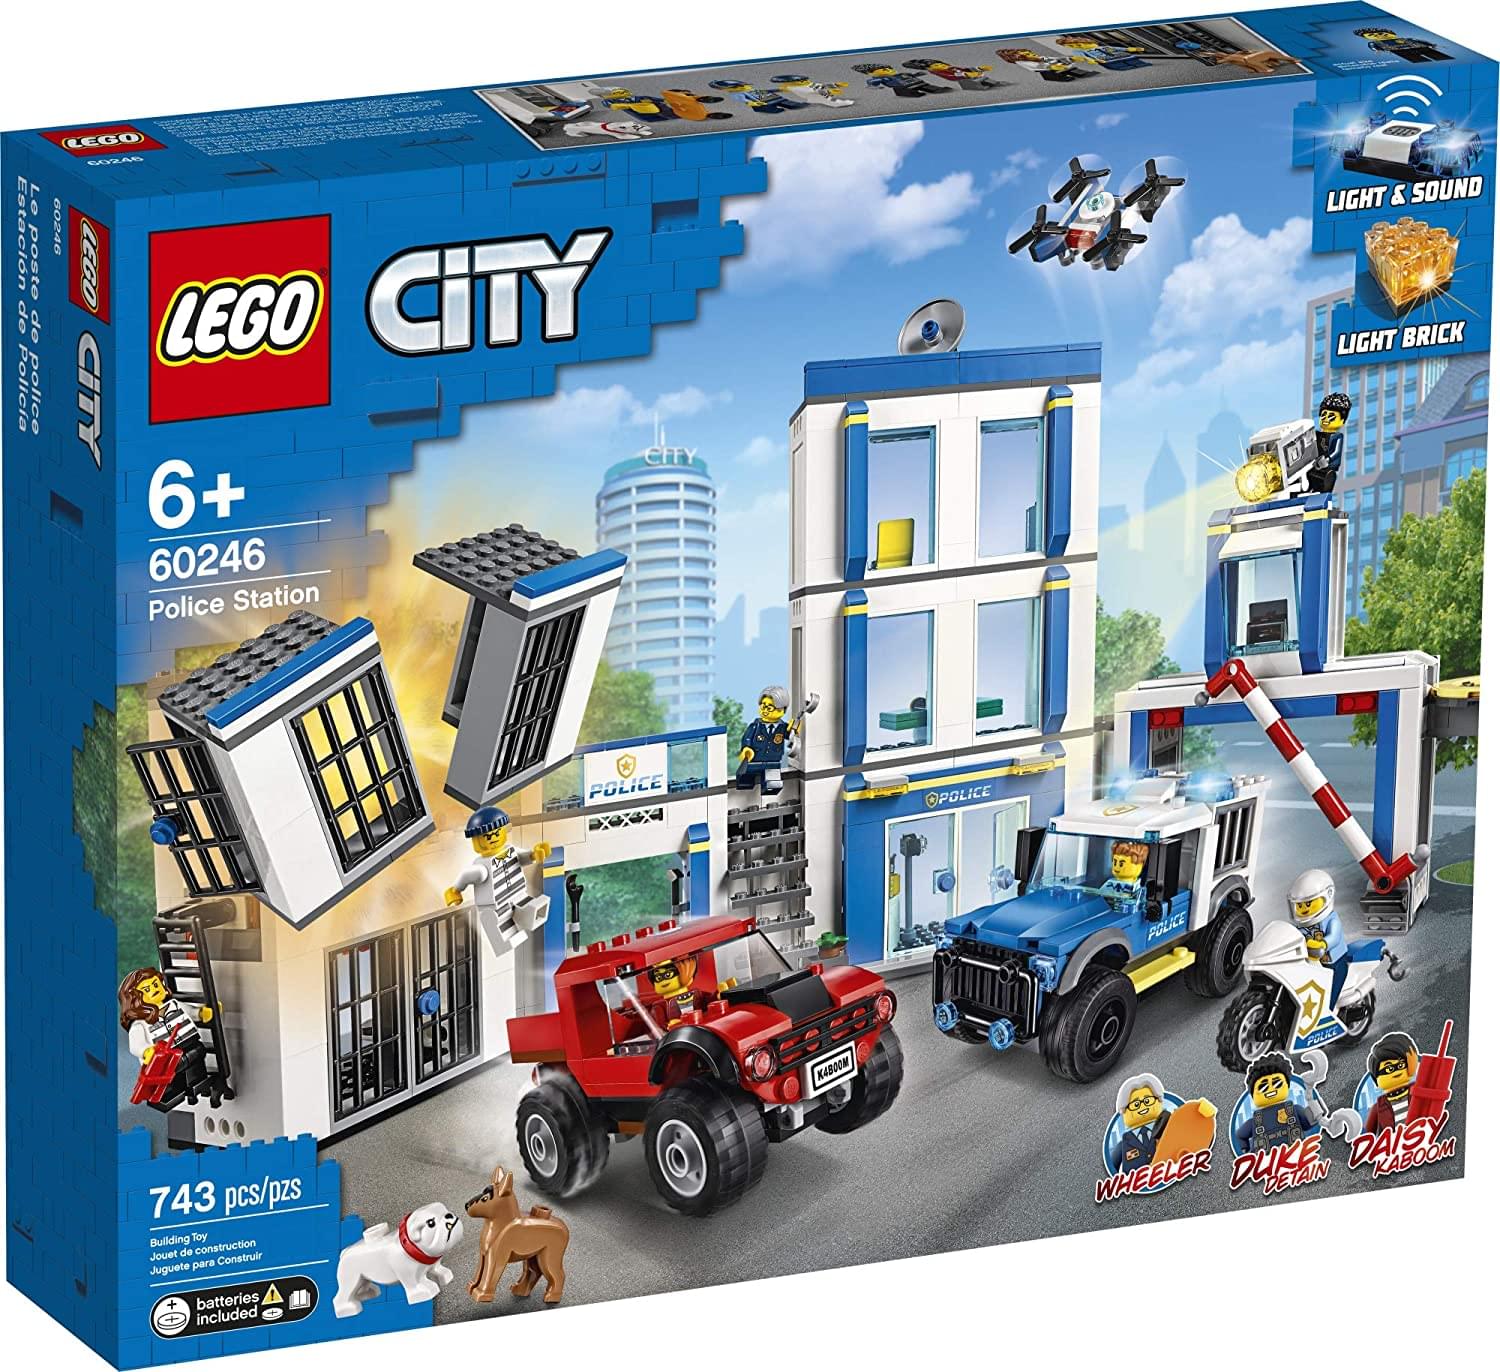 LEGO City Police Station 743 Piece Building Set